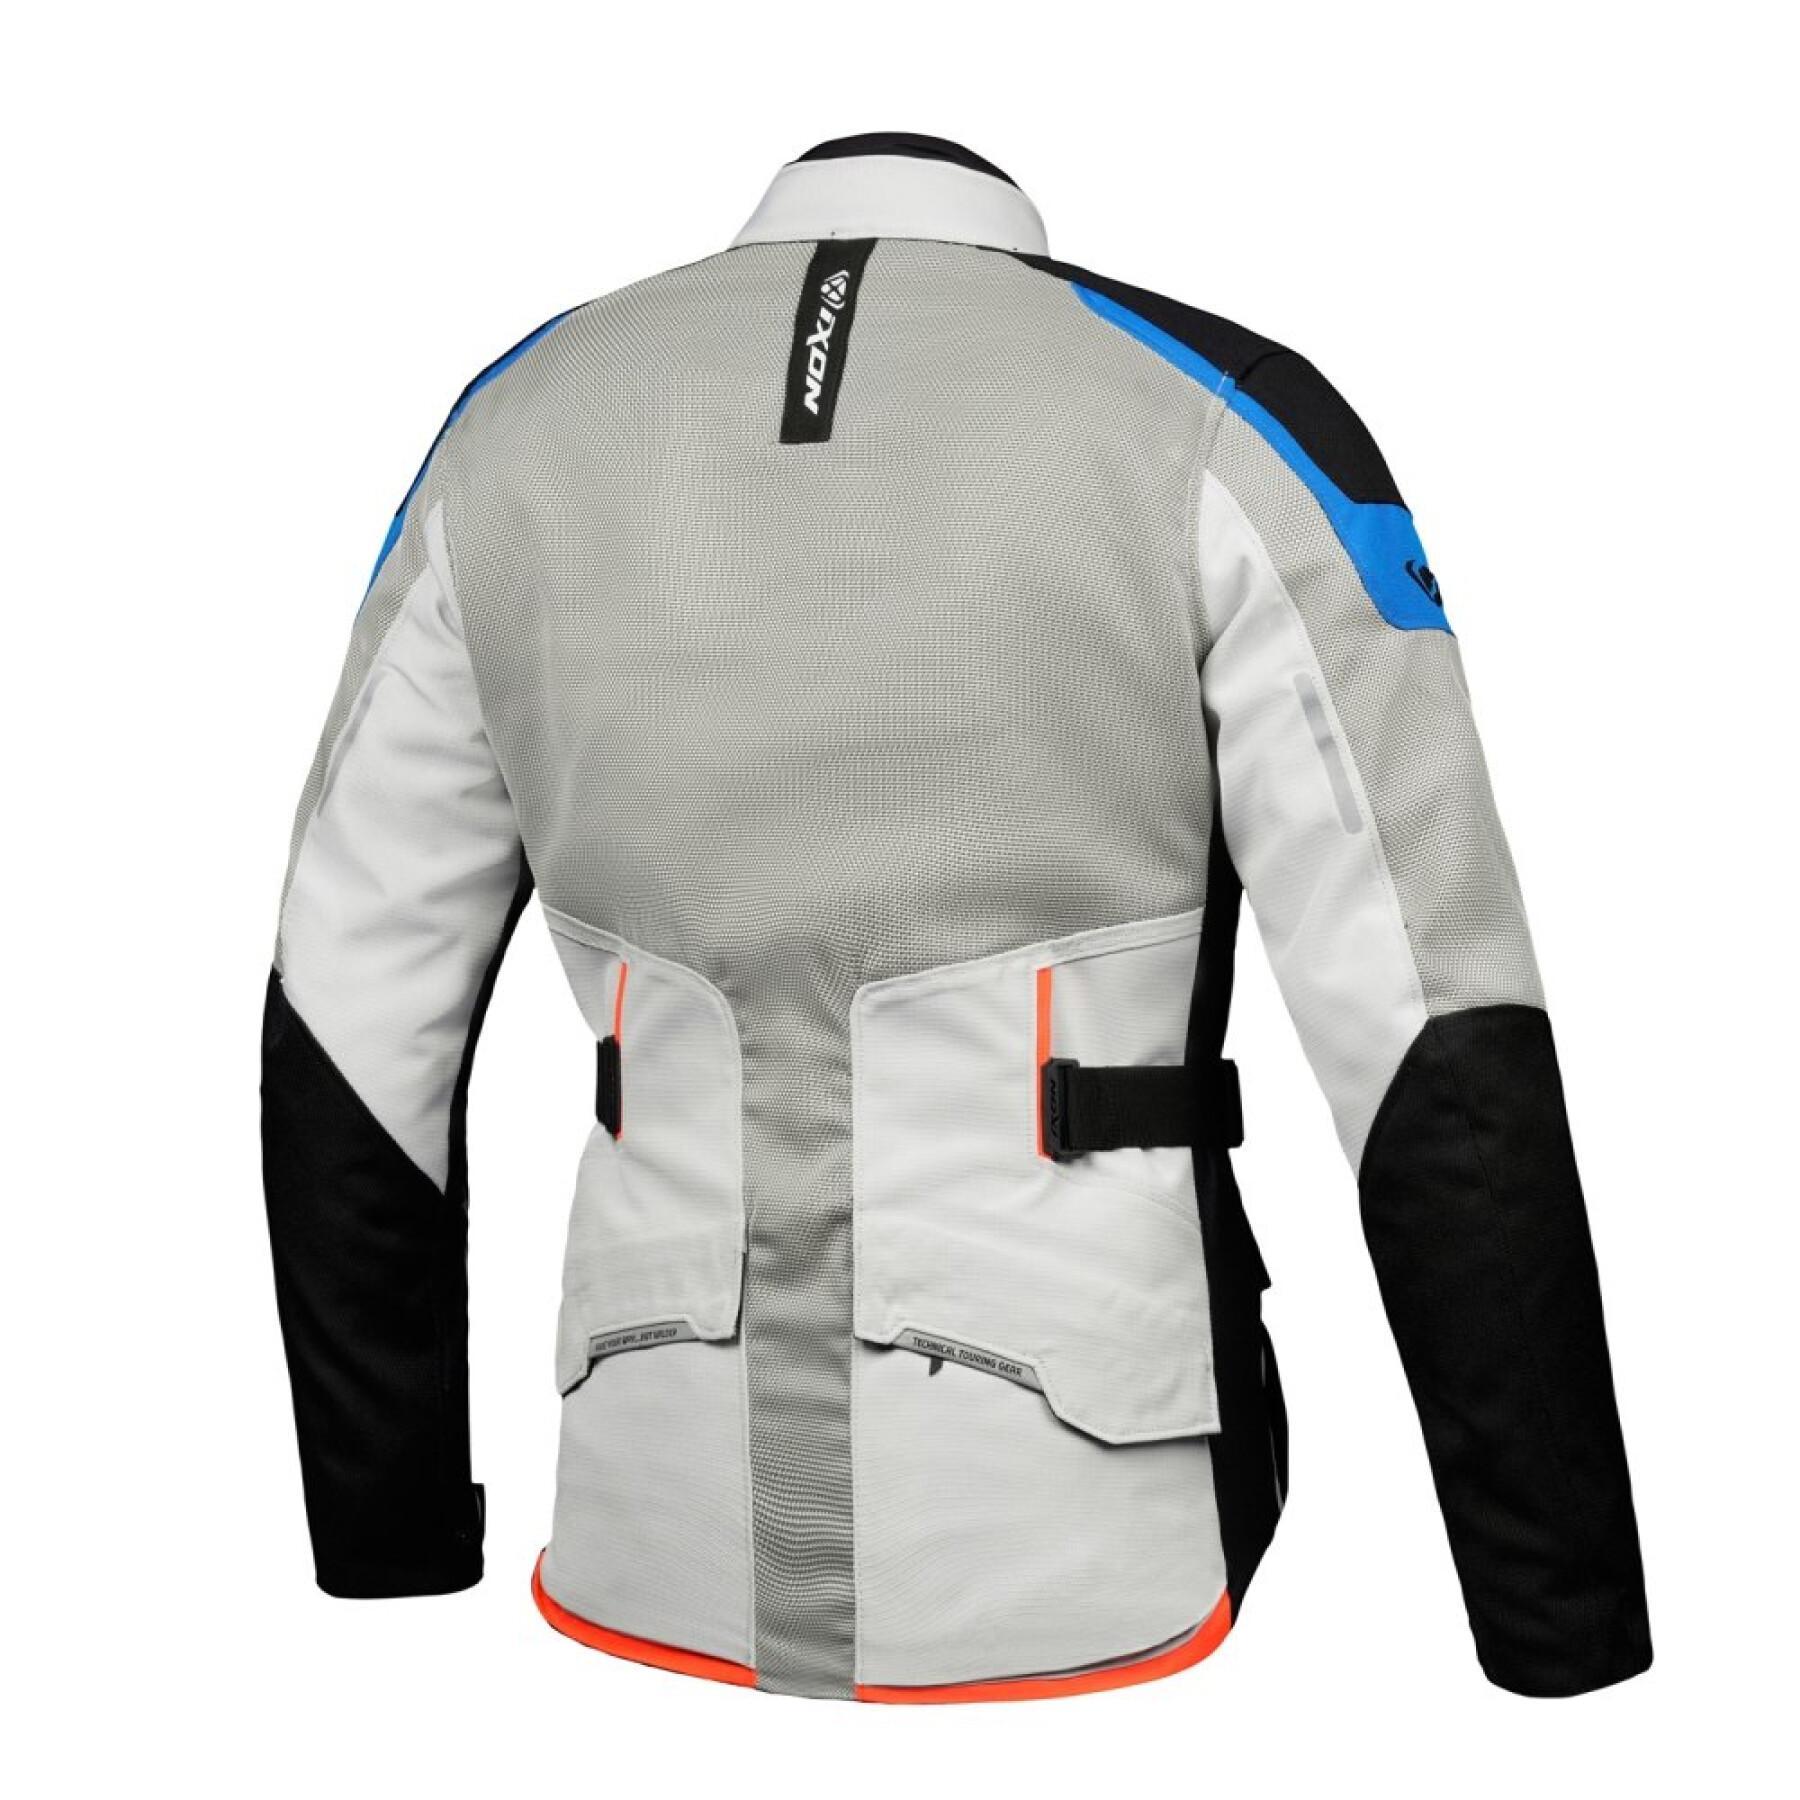 Motorcycle jacket Ixon M-NJord